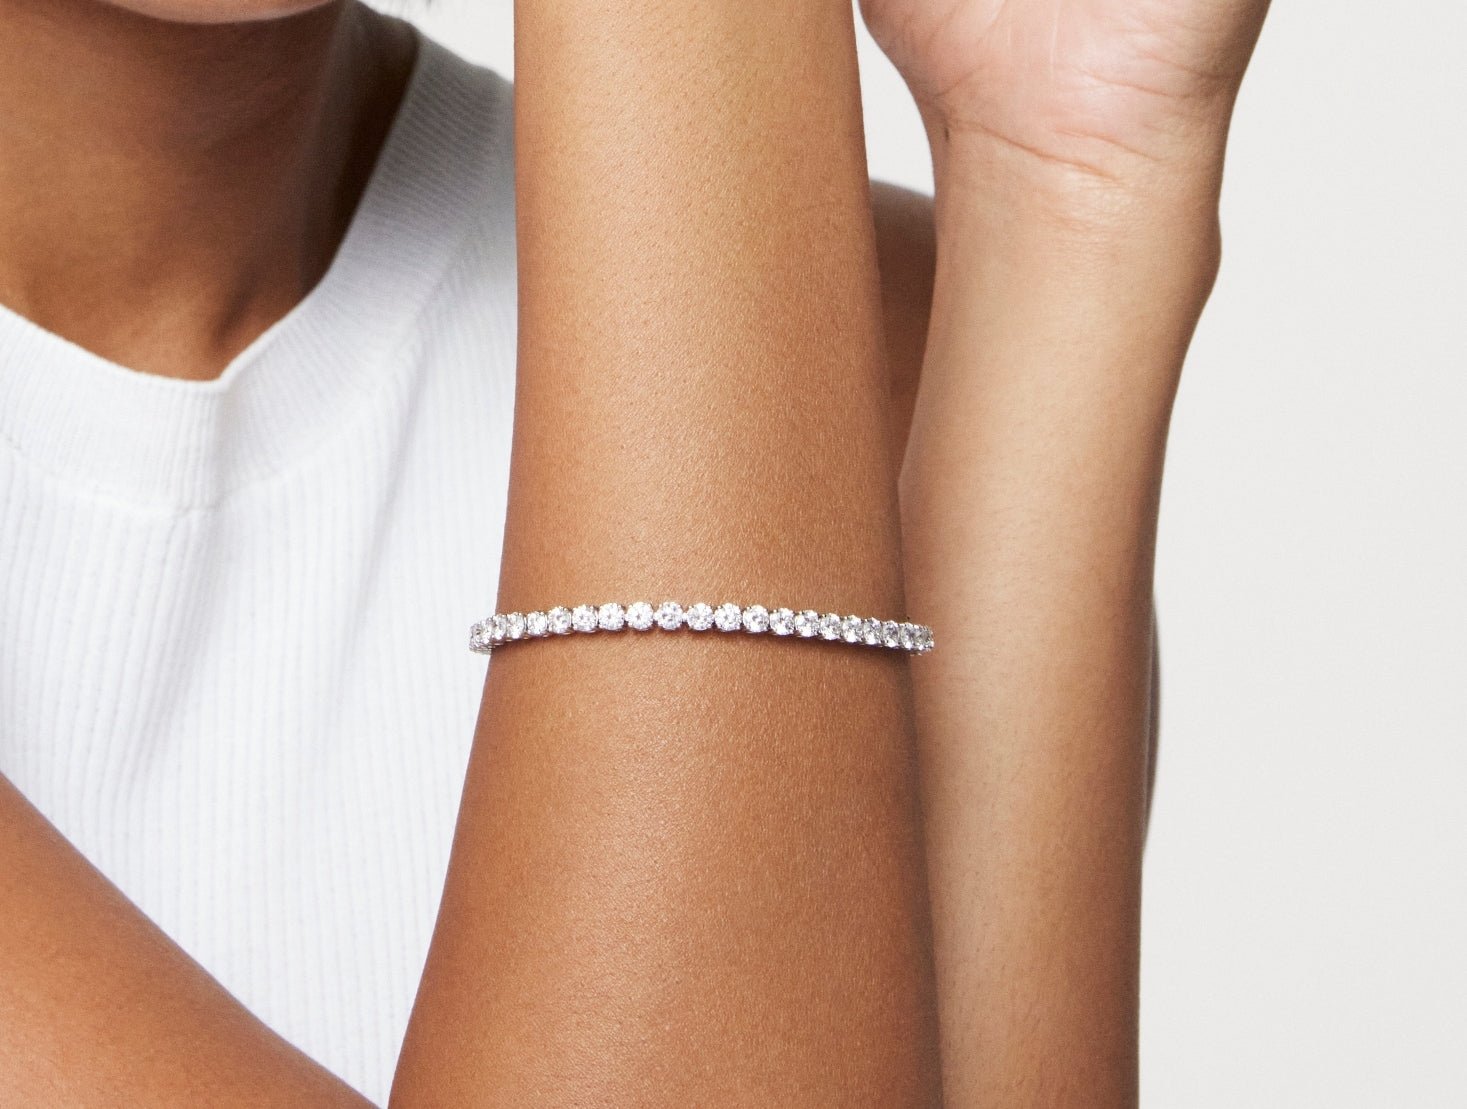 Lab-Grown Diamond Large Tennis Bracelet - G/H color, 7" length | White - #Lightbox Jewelry#